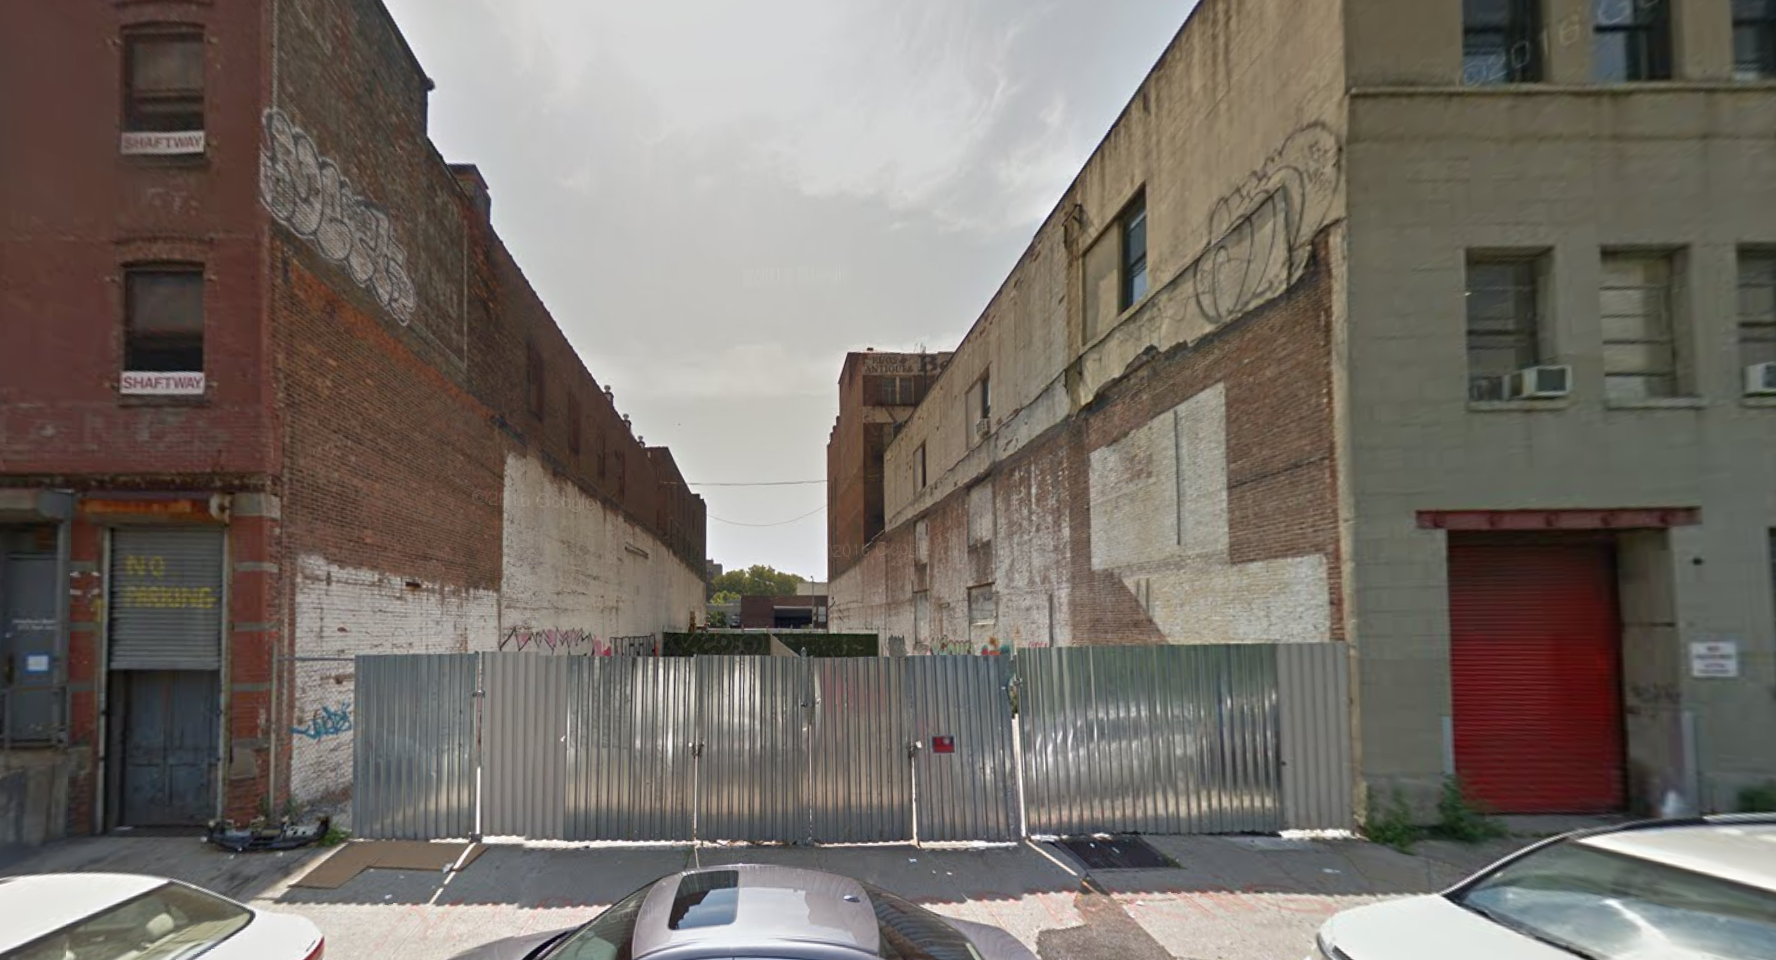 2568 Park Avenue, image via Google Maps